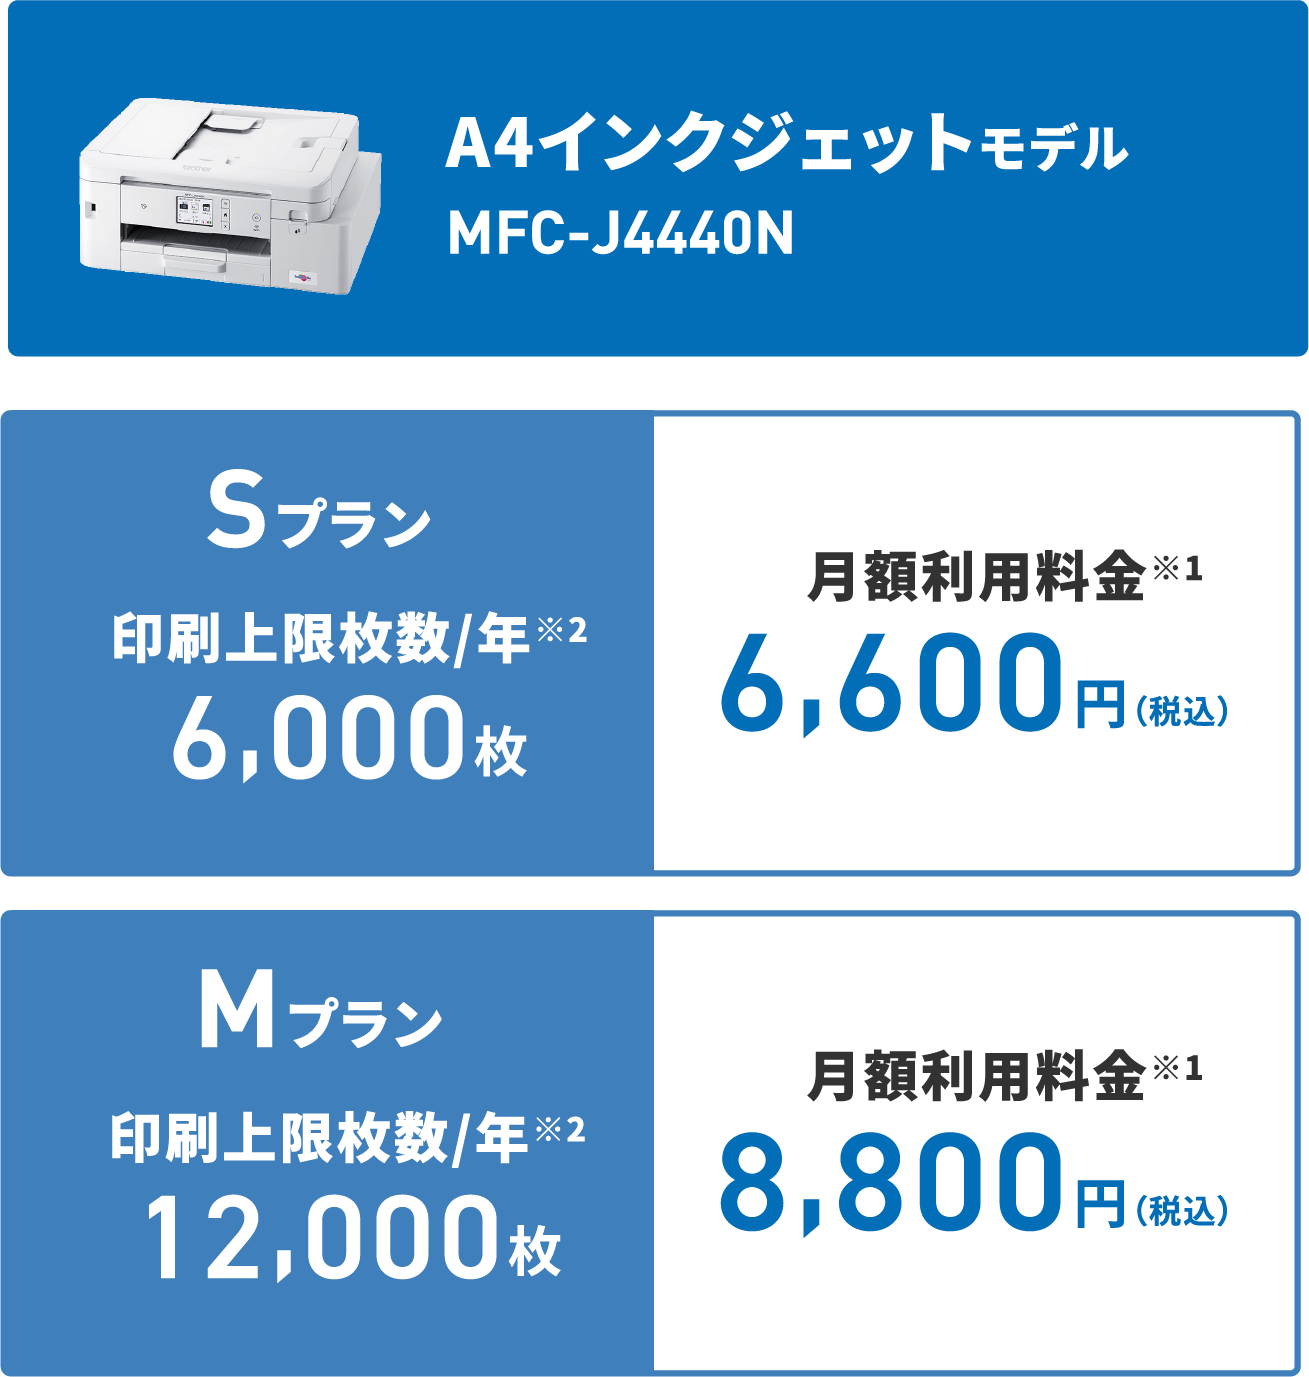 A4インクジェットモデル MFC-J4440N